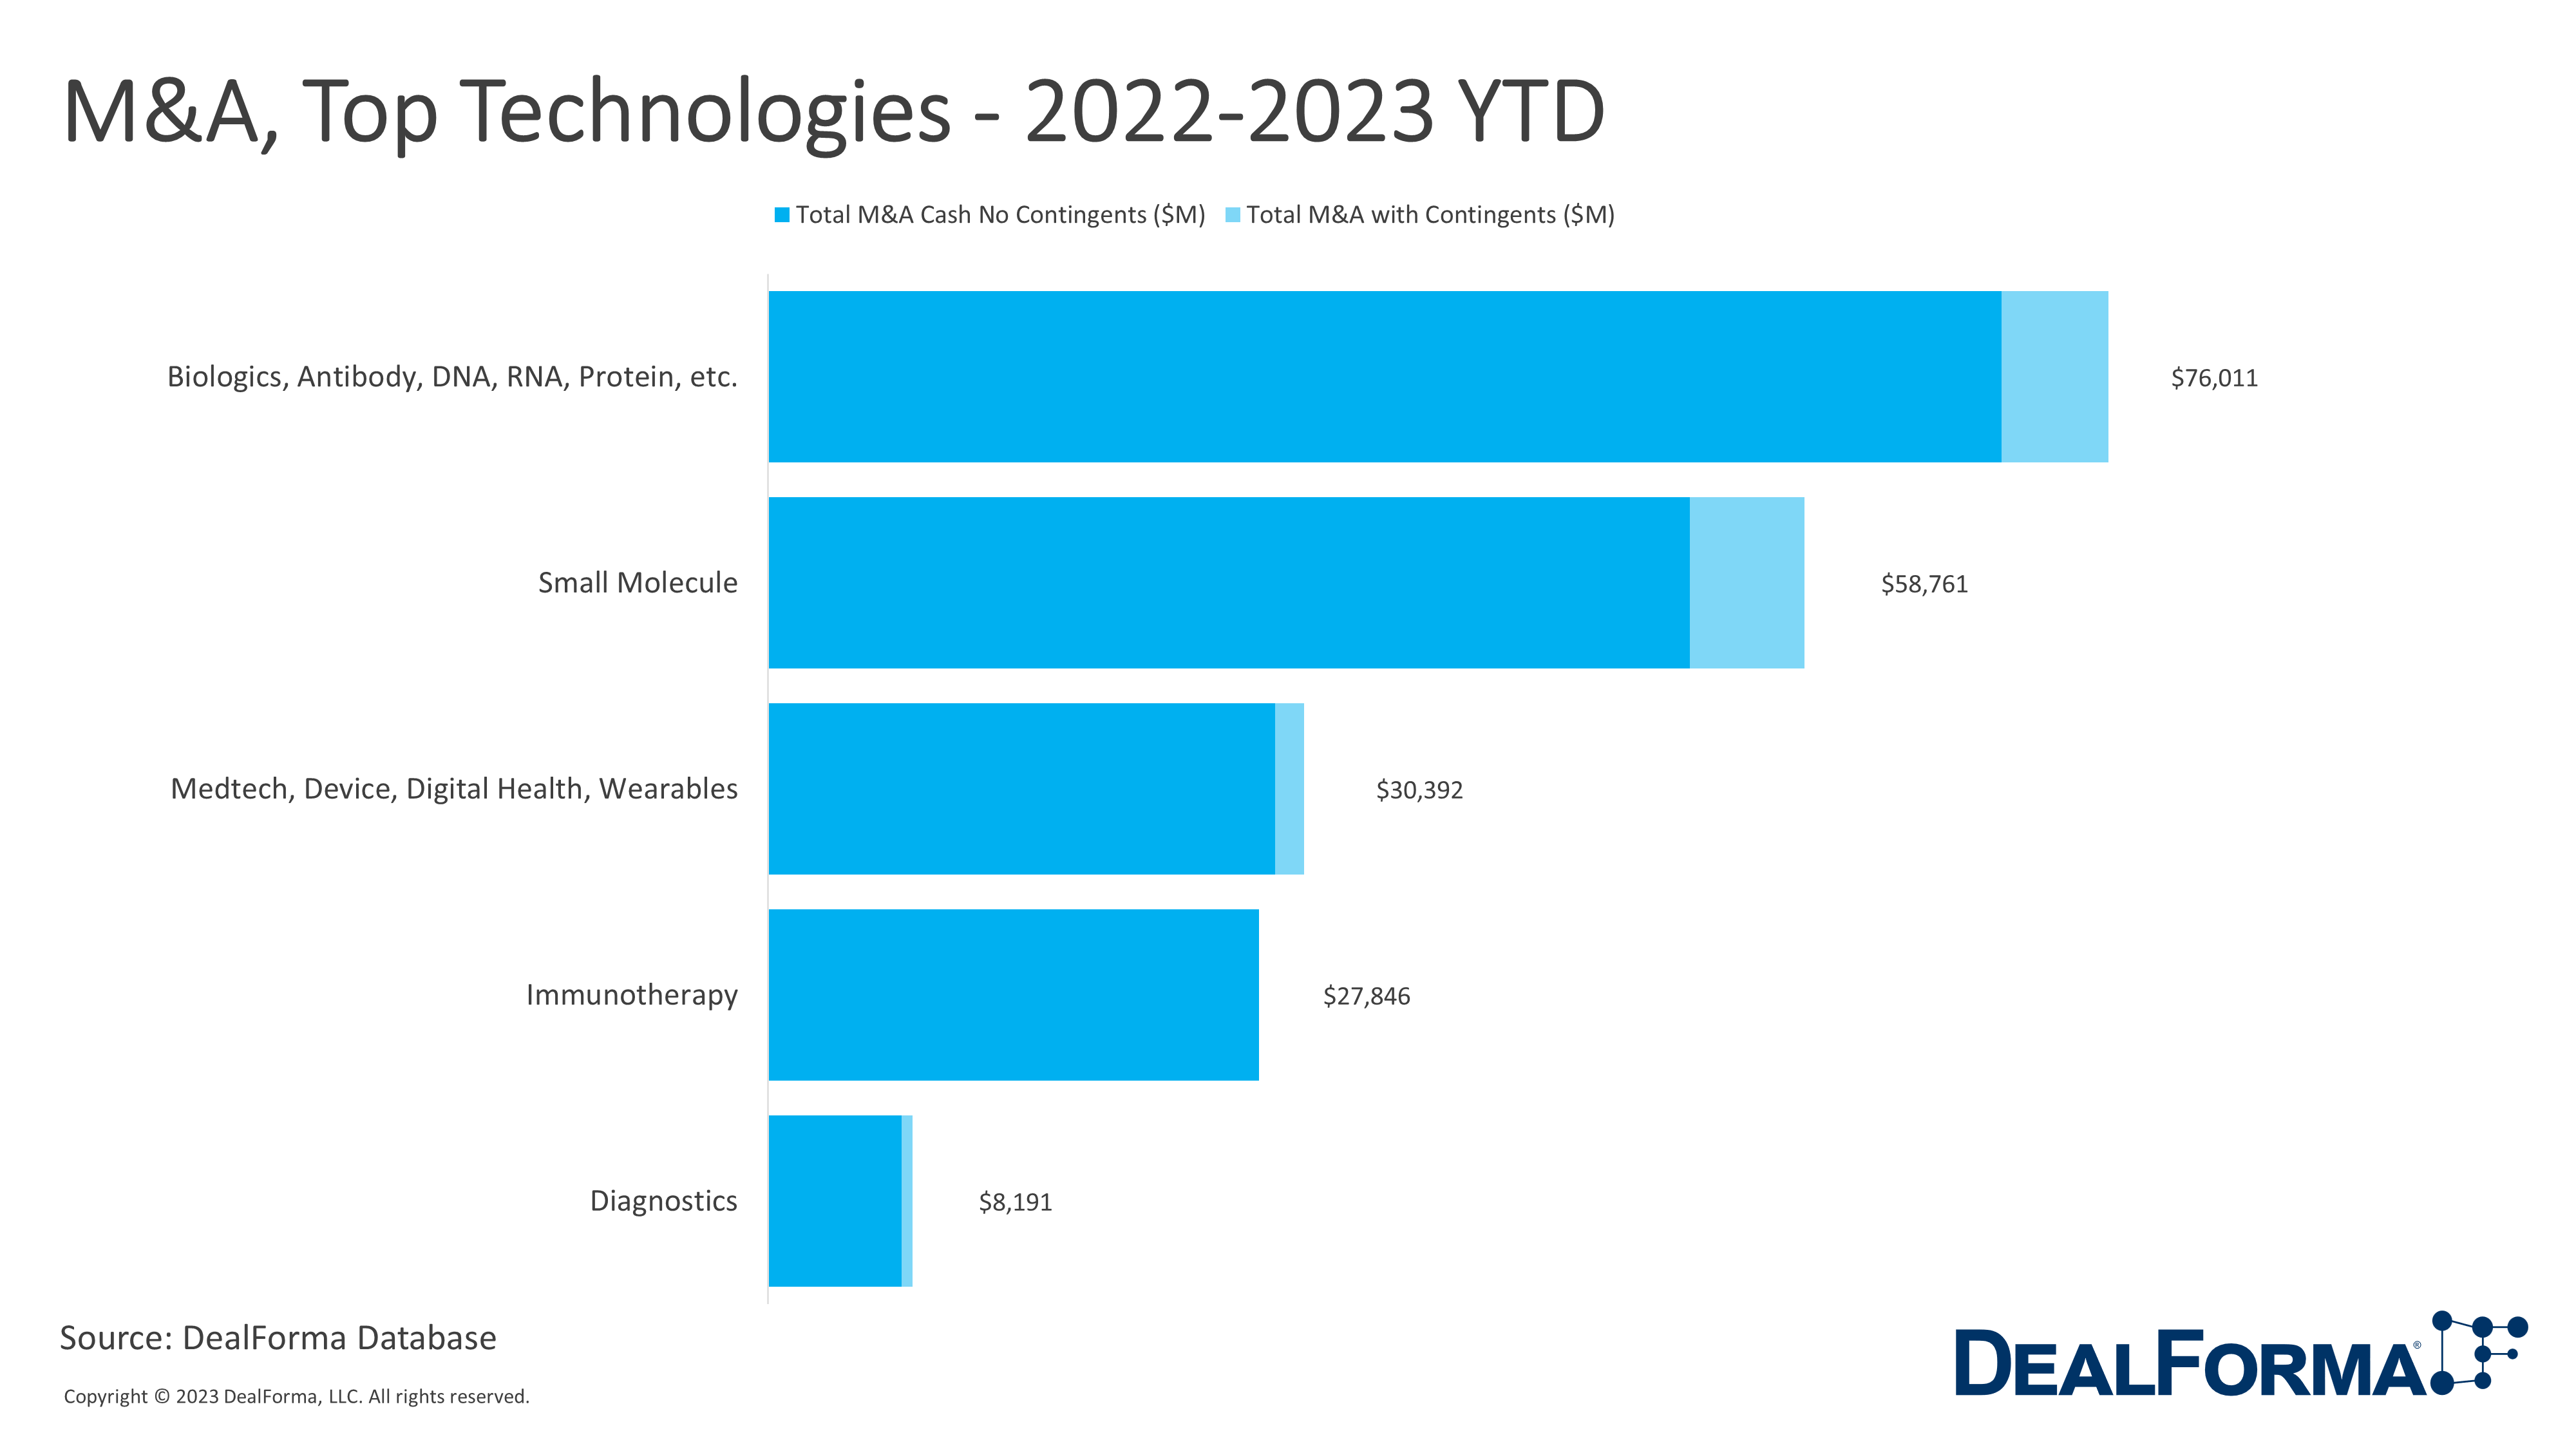 M&A, Top Technologies 2002-2023 YTD - DealForma